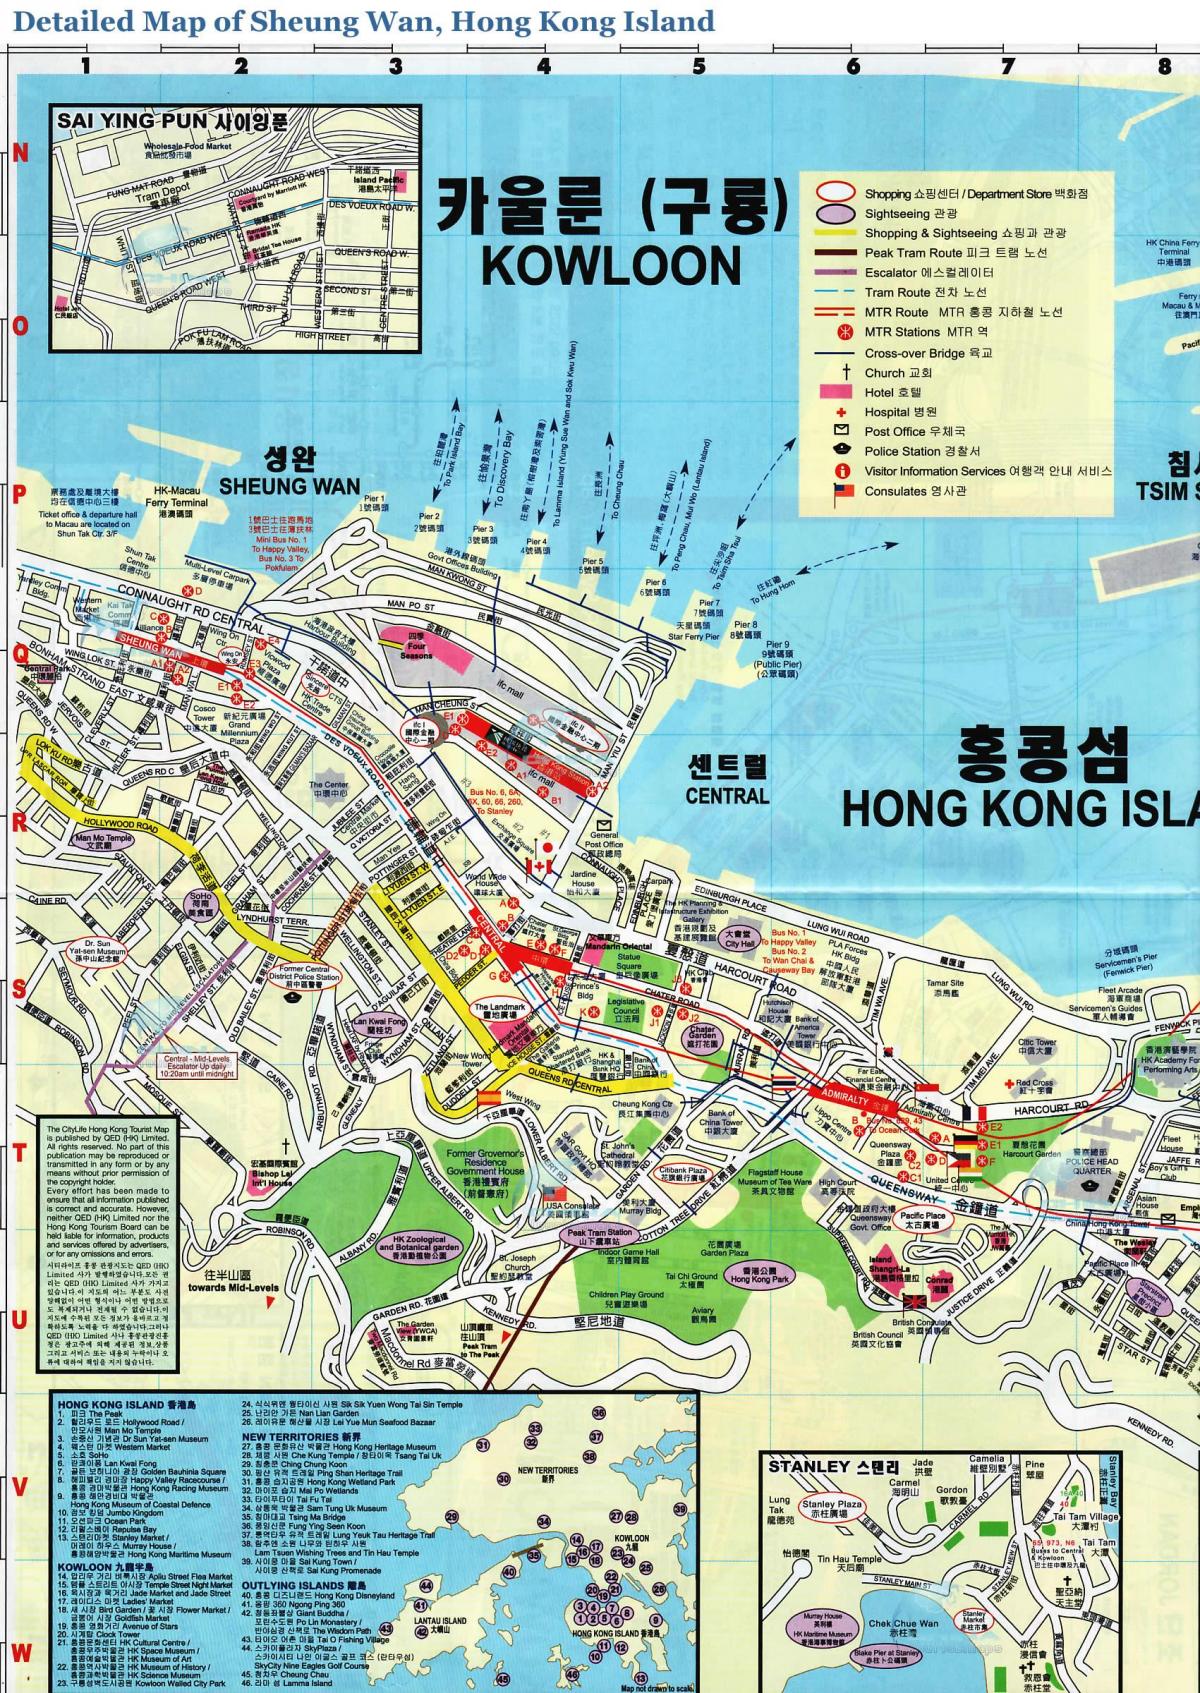 Karte von Sheung Wan Hong Kong